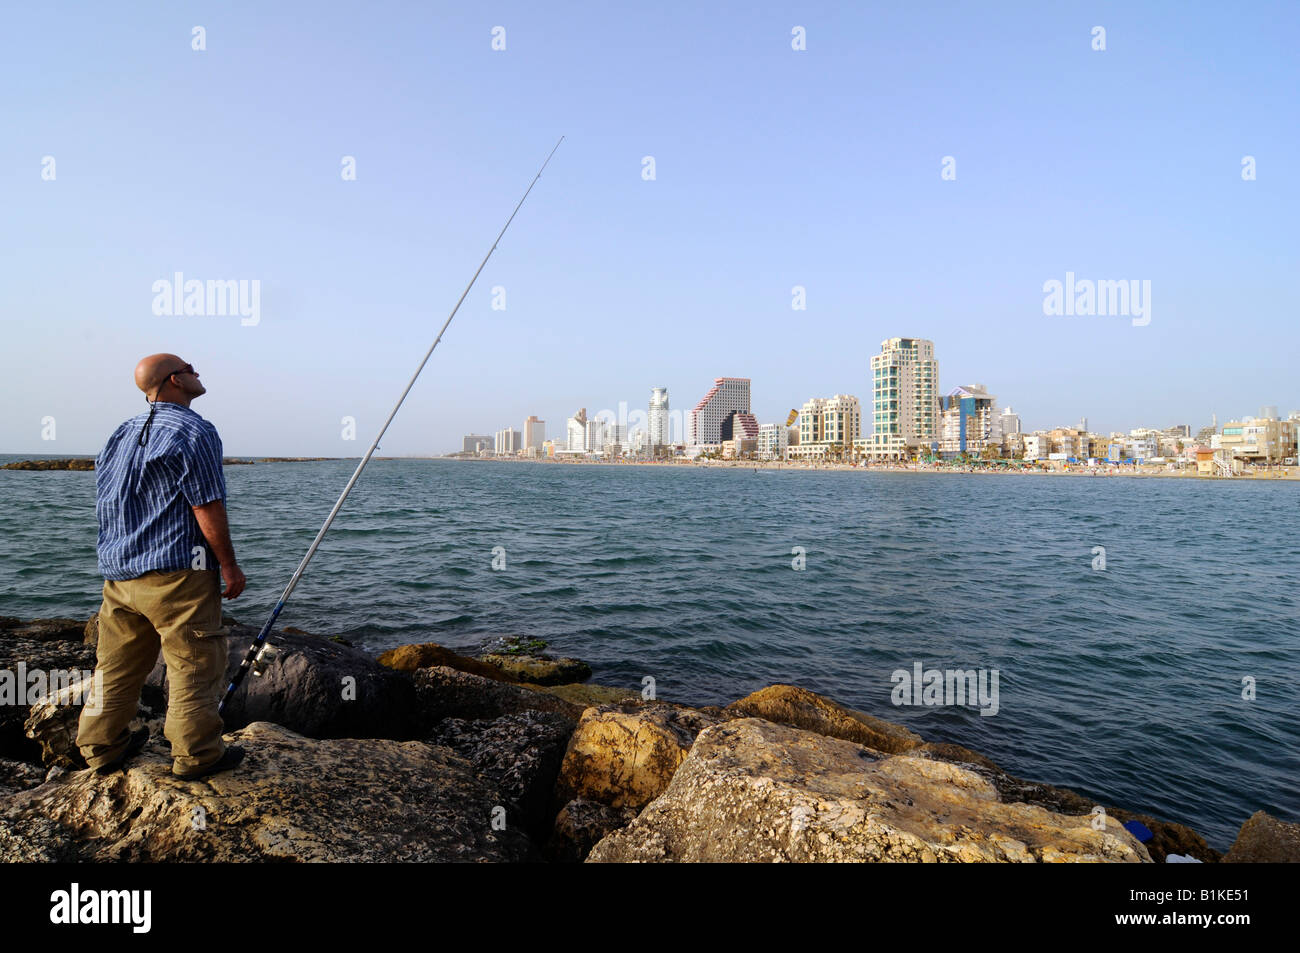 A man fishing near Tel Aviv beach, with the city's glittering skyscrapers skyline in background. Photo taken in Tel Aviv, Israel Stock Photo